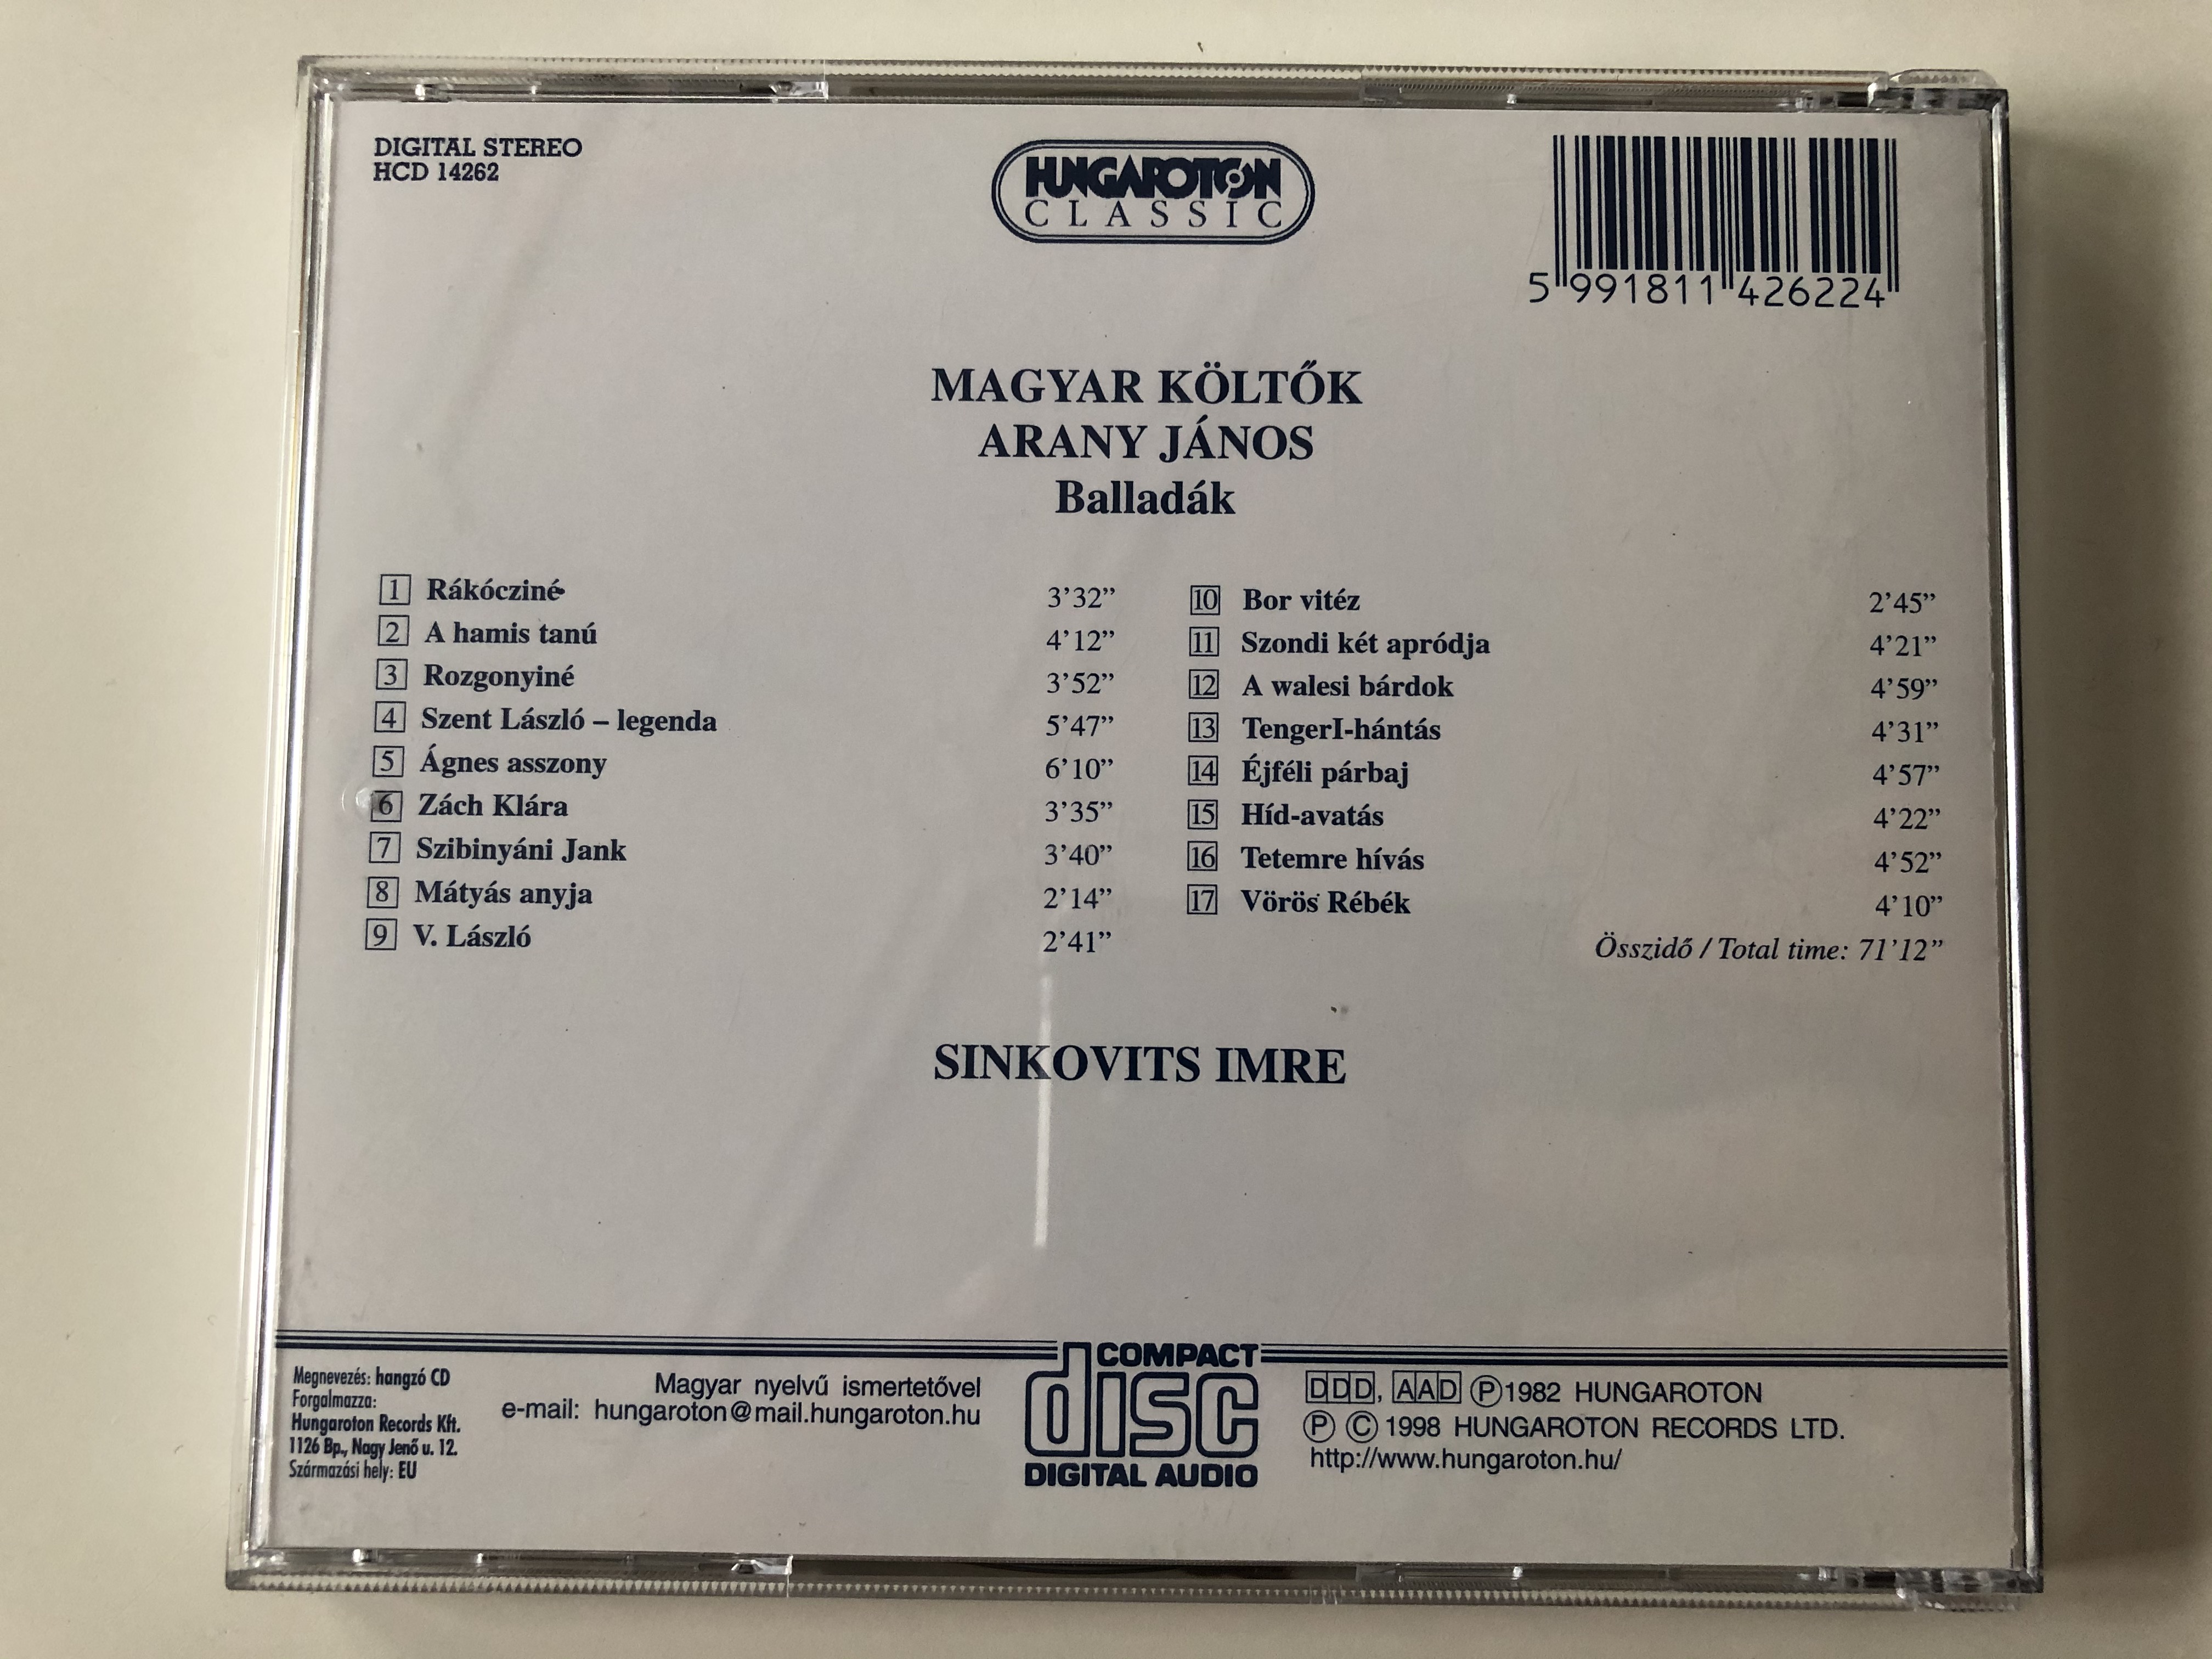 arany-janos-balladak-agnes-asszony-matyas-anyja-szondi-ket-aprodja-a-walesi-bardok-tengeri-hantas-hid-avatas-tetemre-hivas-sinkovits-imre-hungaroton-classic-audio-cd-1998-stereo-hcd-5-.jpg